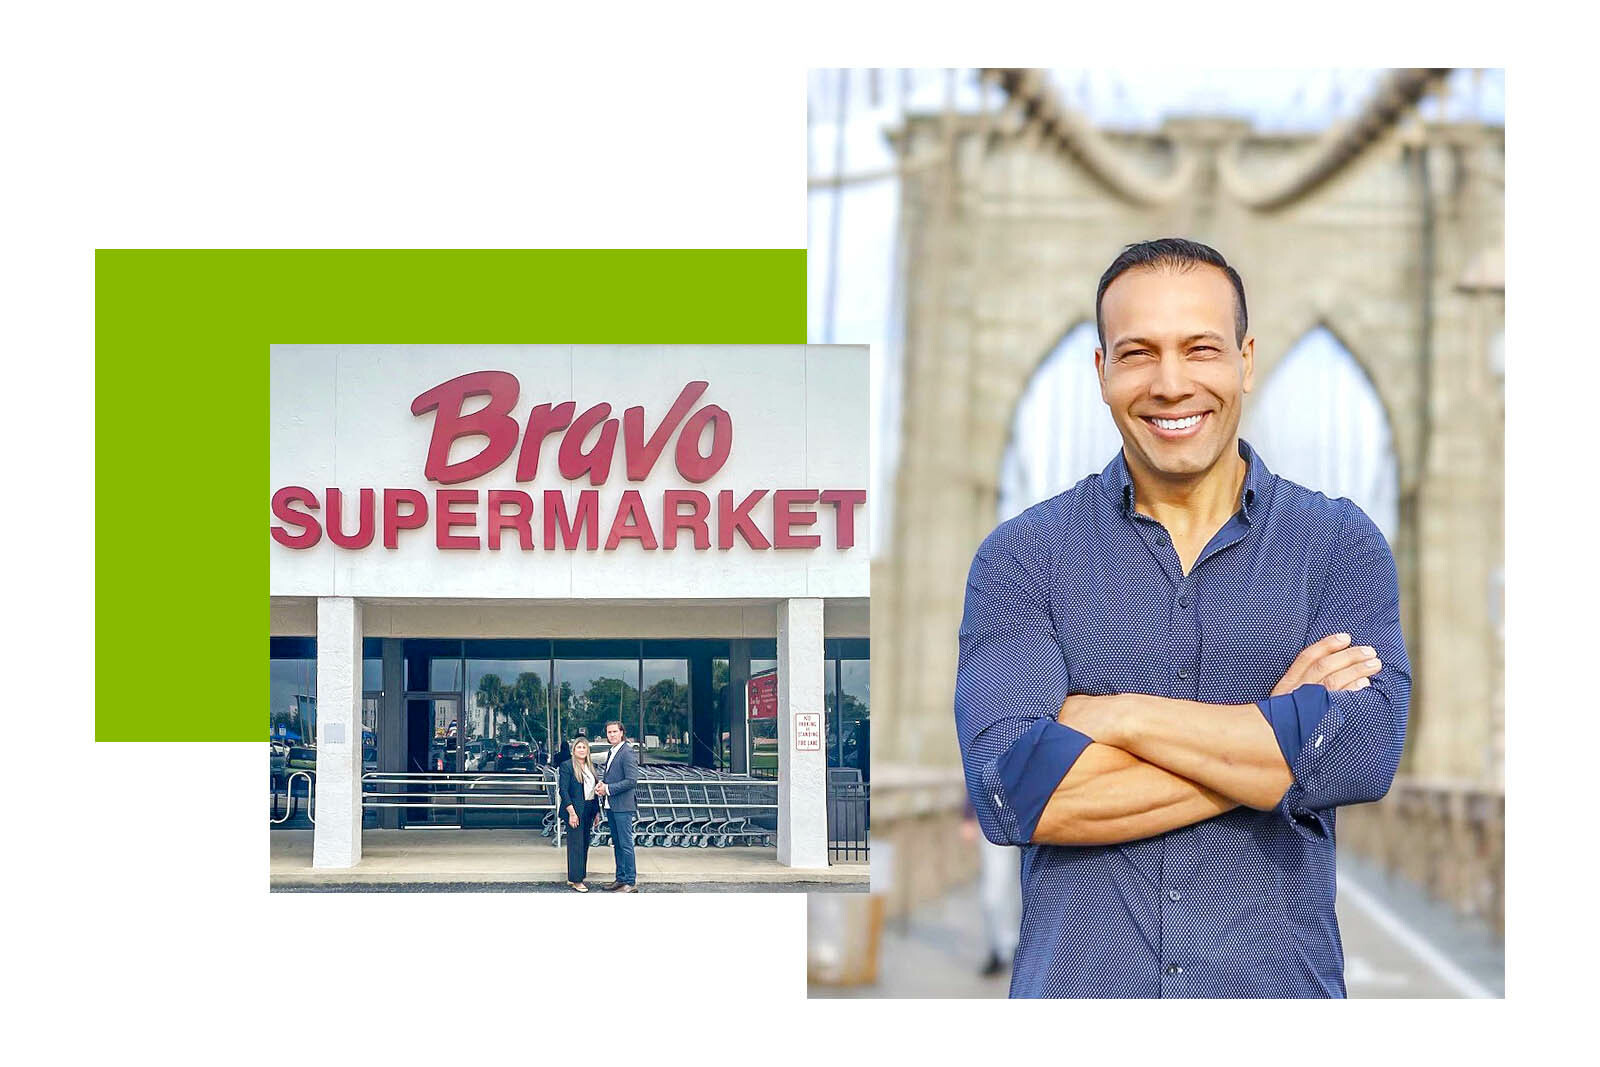 photos of Manuel Gutierrez, and Bravo Supermarket